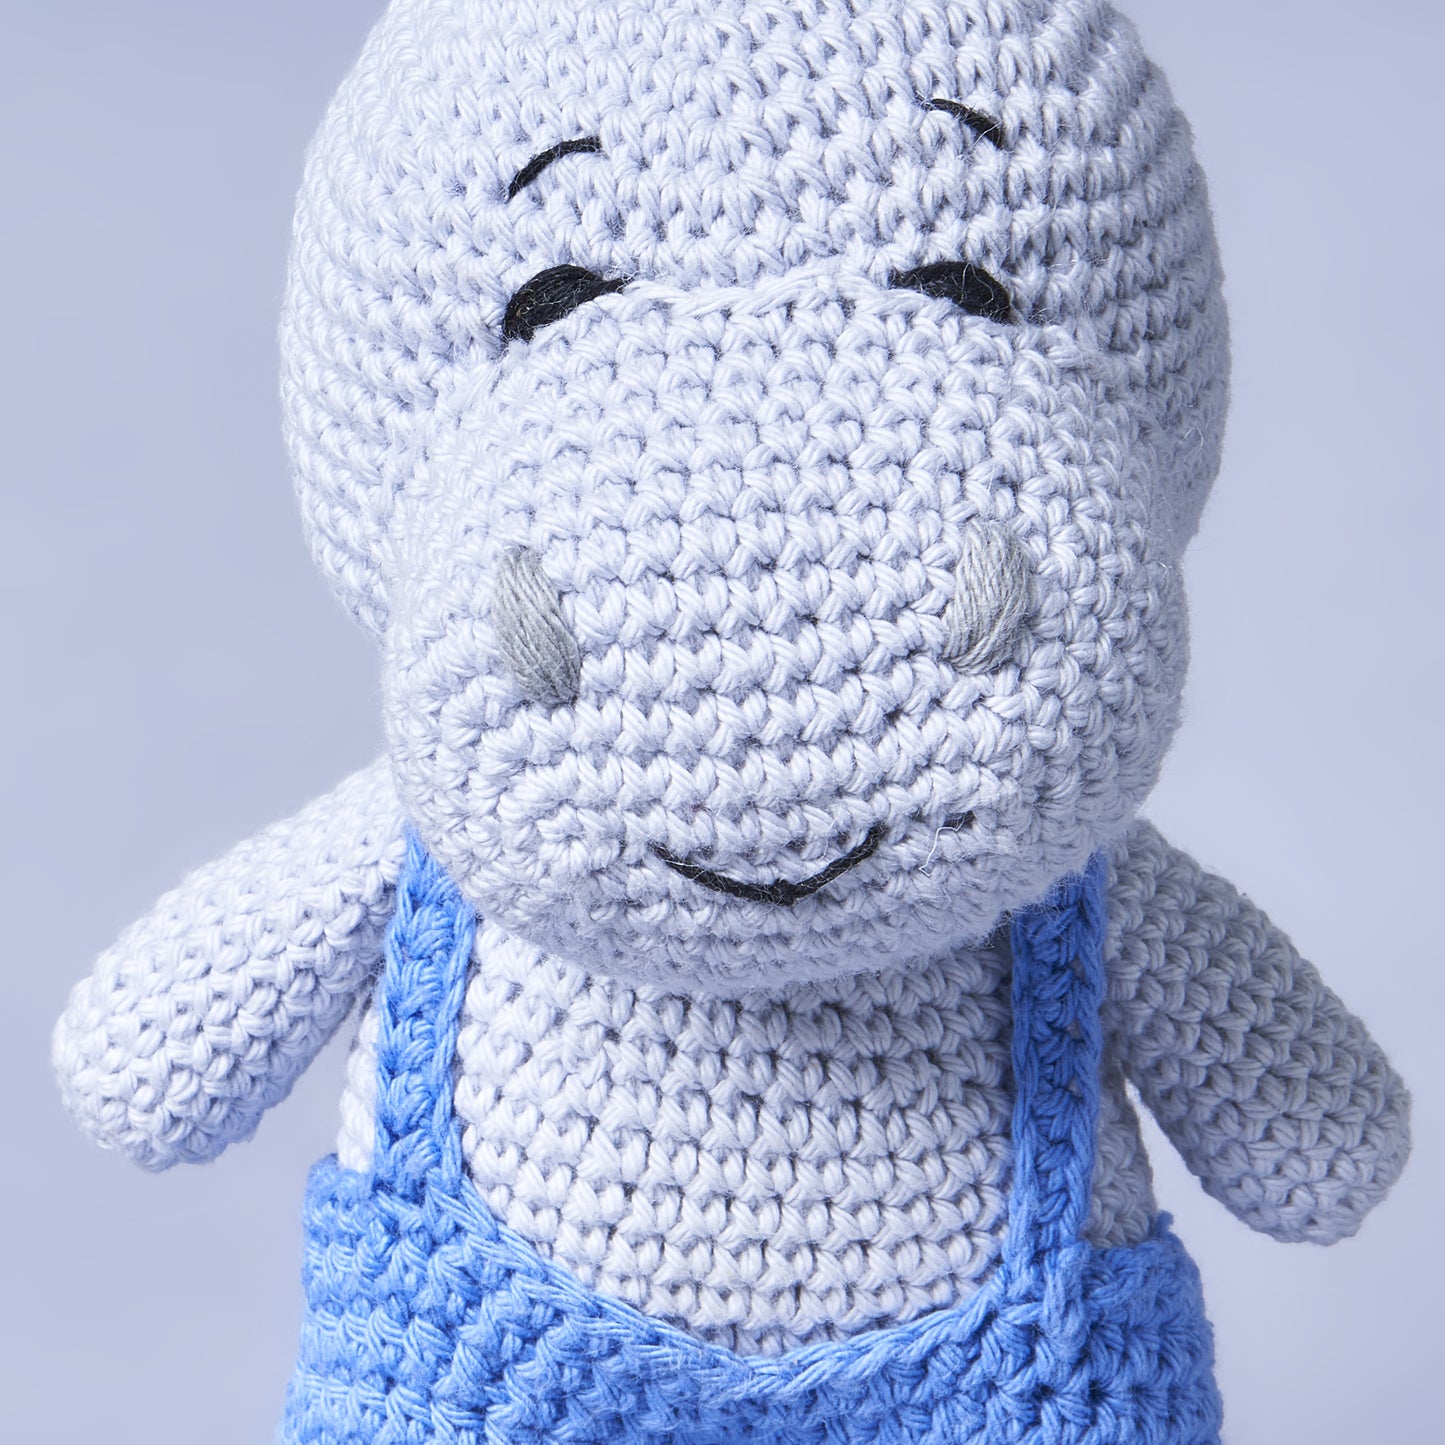 Blippo Hippo crochet toy